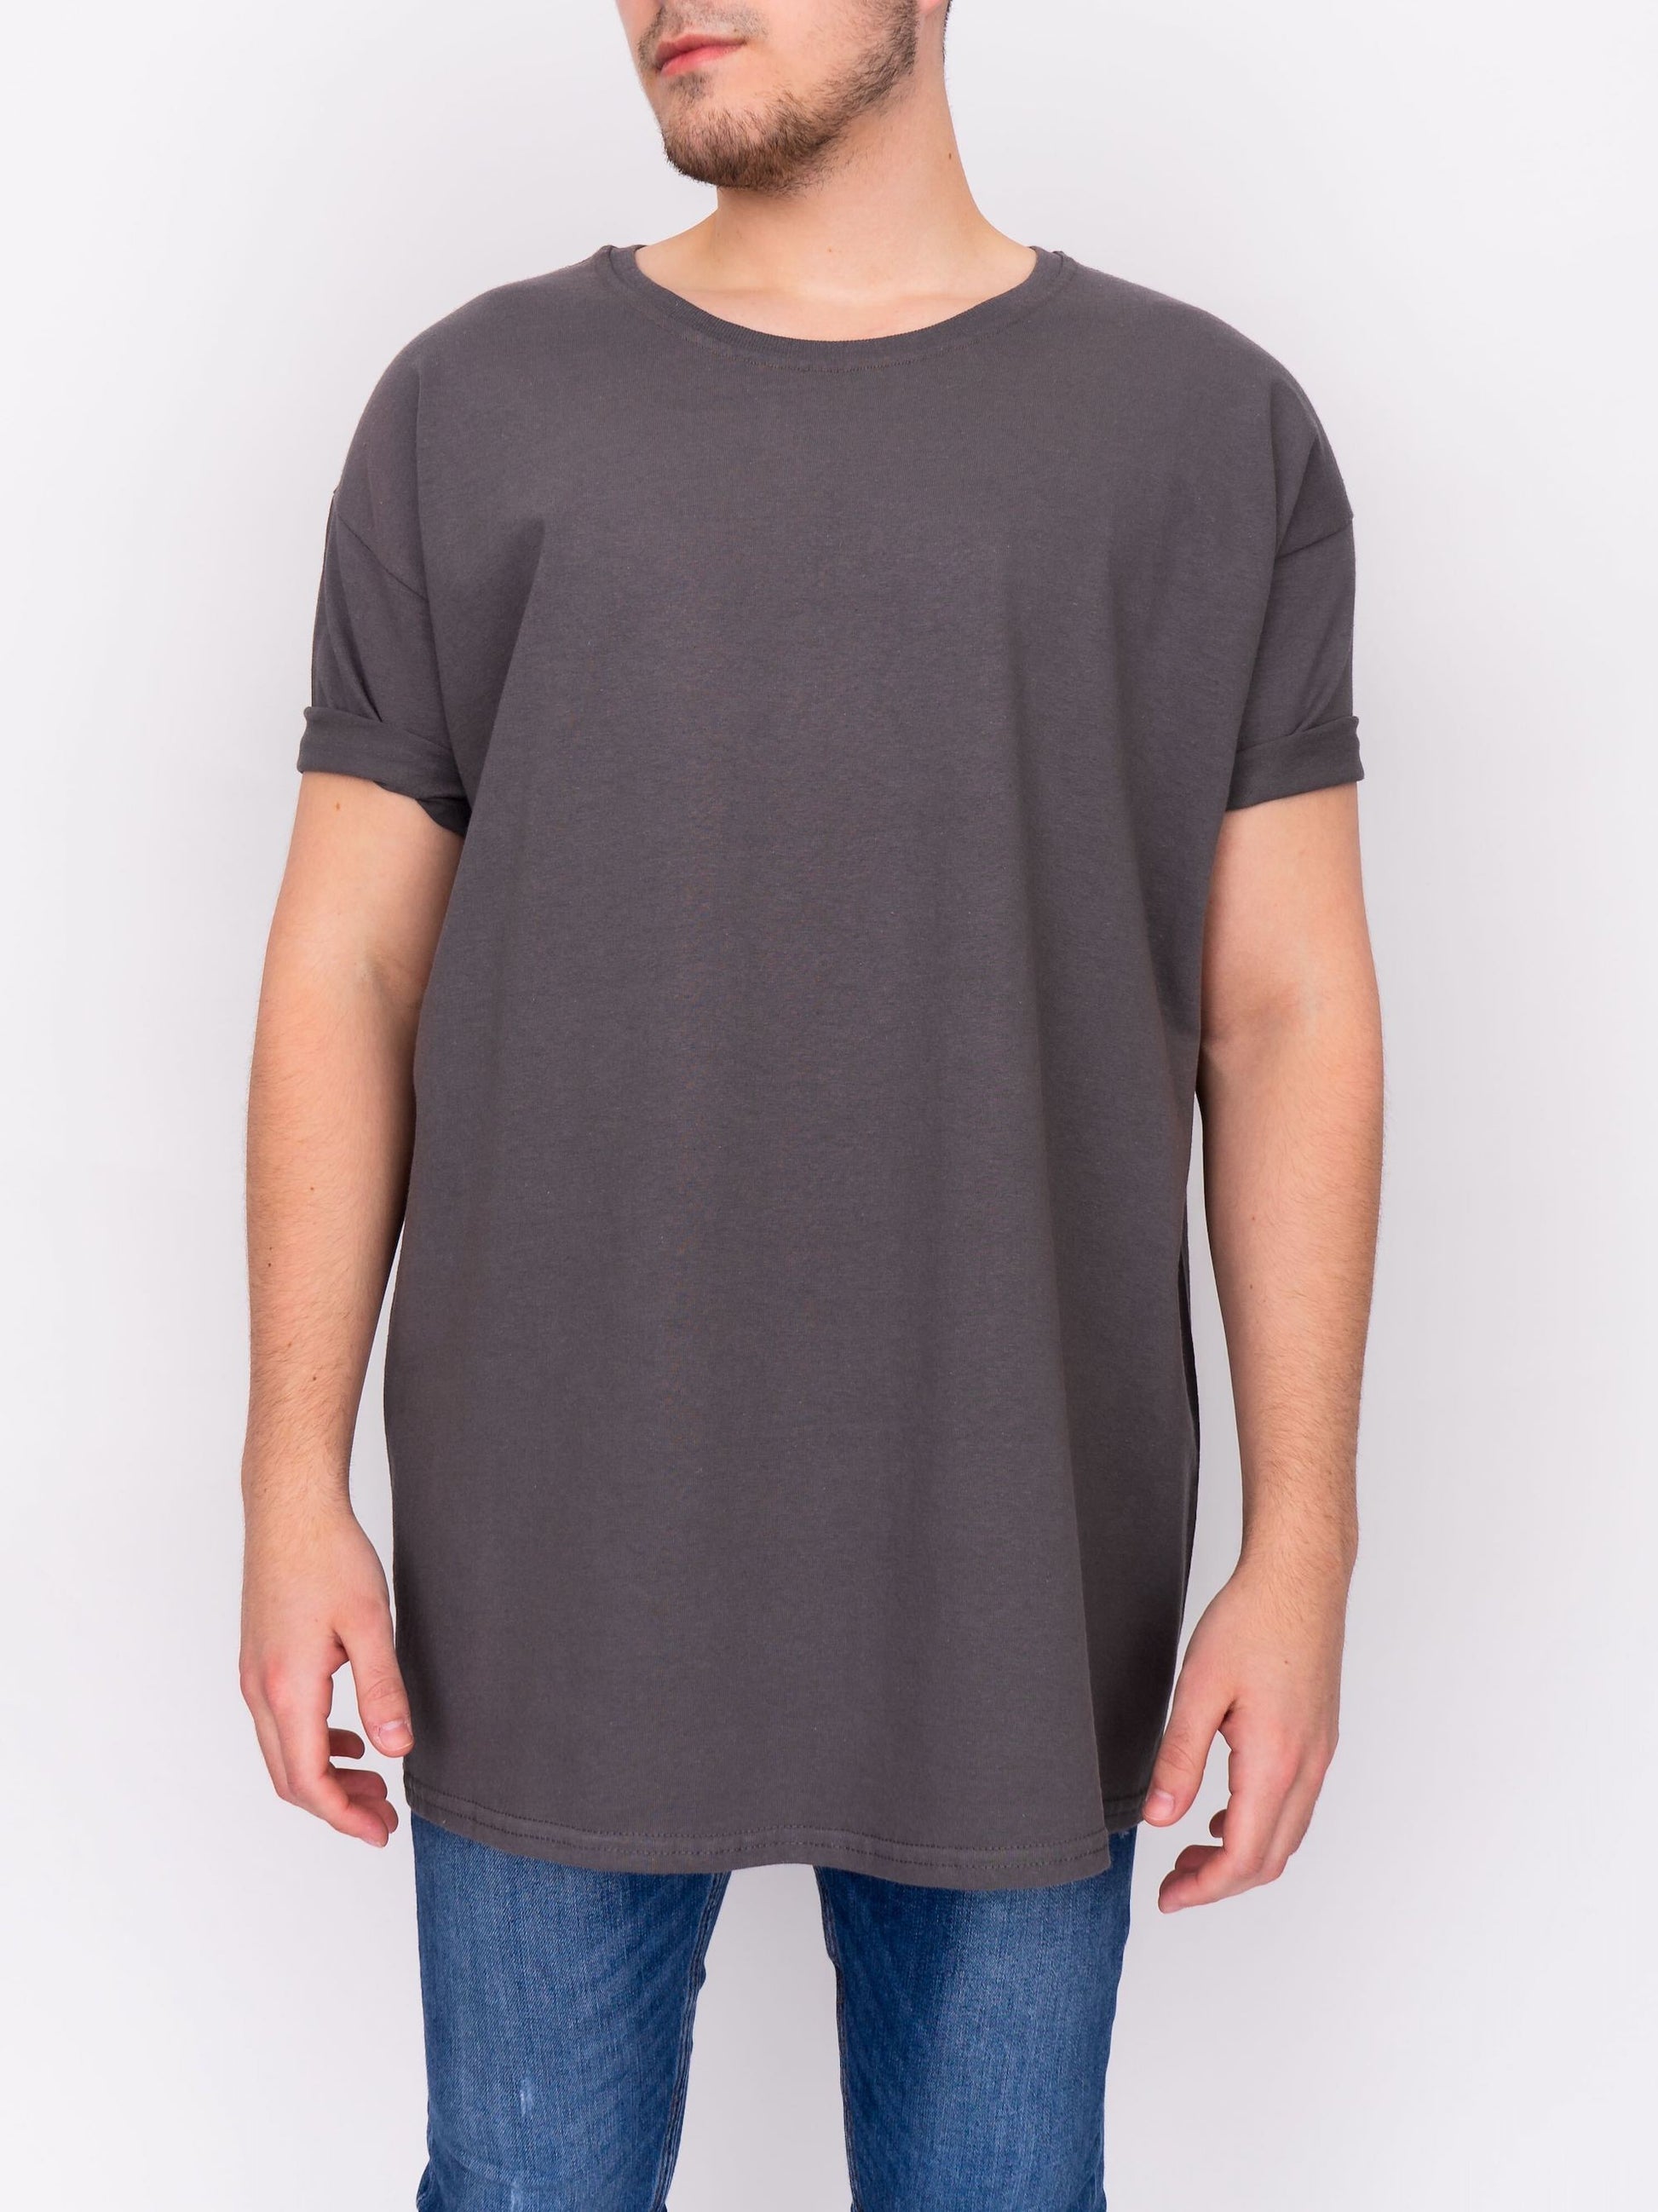 Oversize T-Shirt - Charcoal - DEEP Clothing